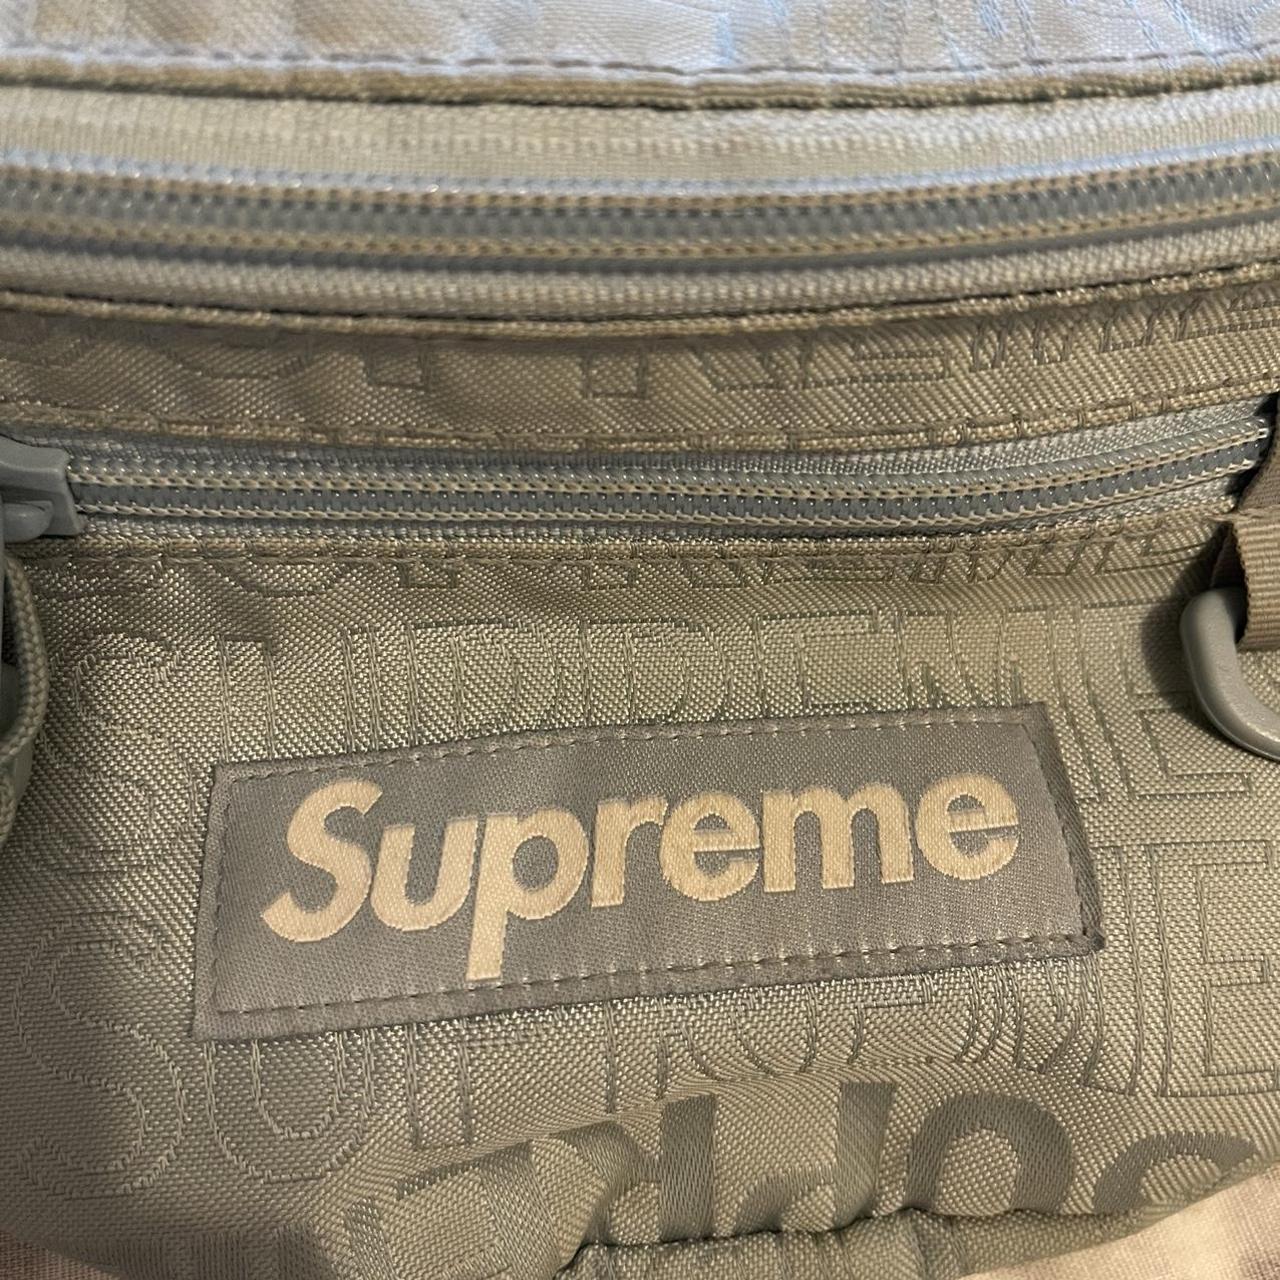 Supreme SS20 waist bag - Depop